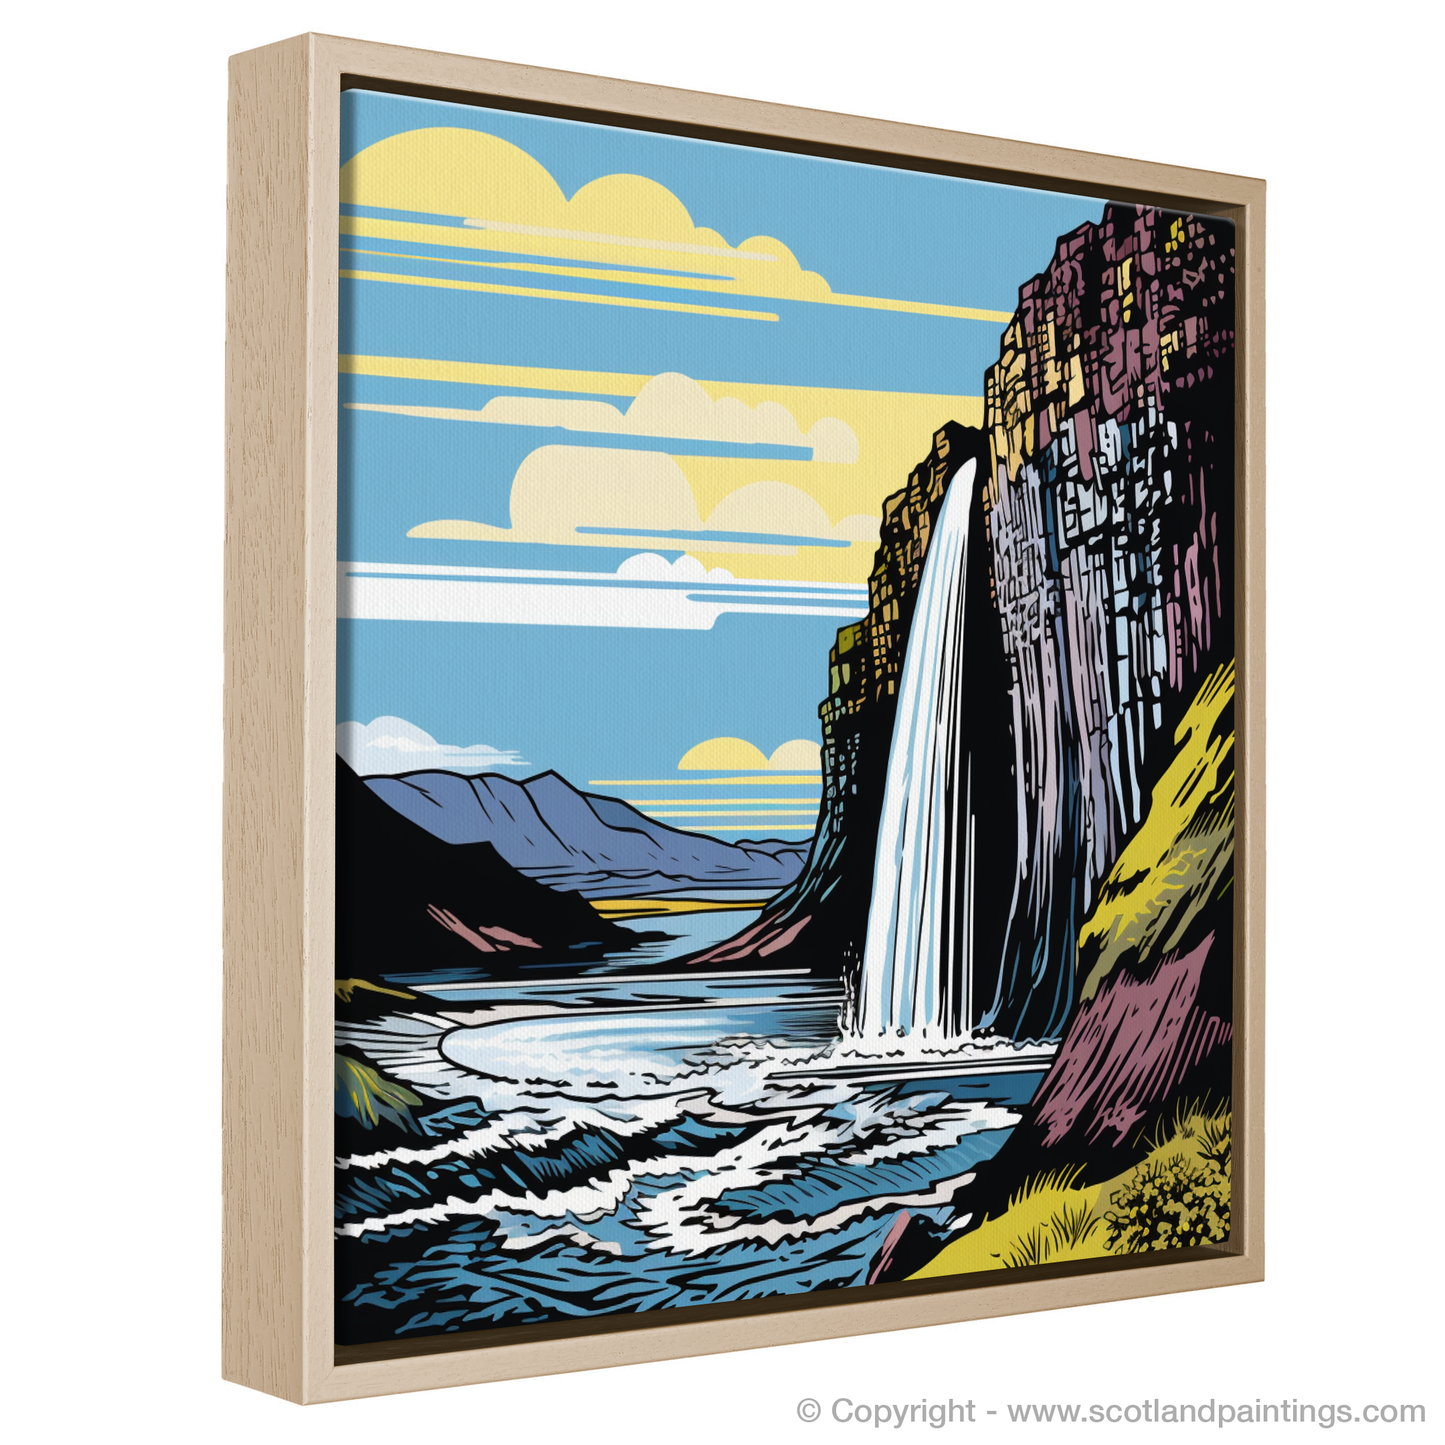 Mealt Falls Majesty: A Pop Art Tribute to Skye's Natural Wonder